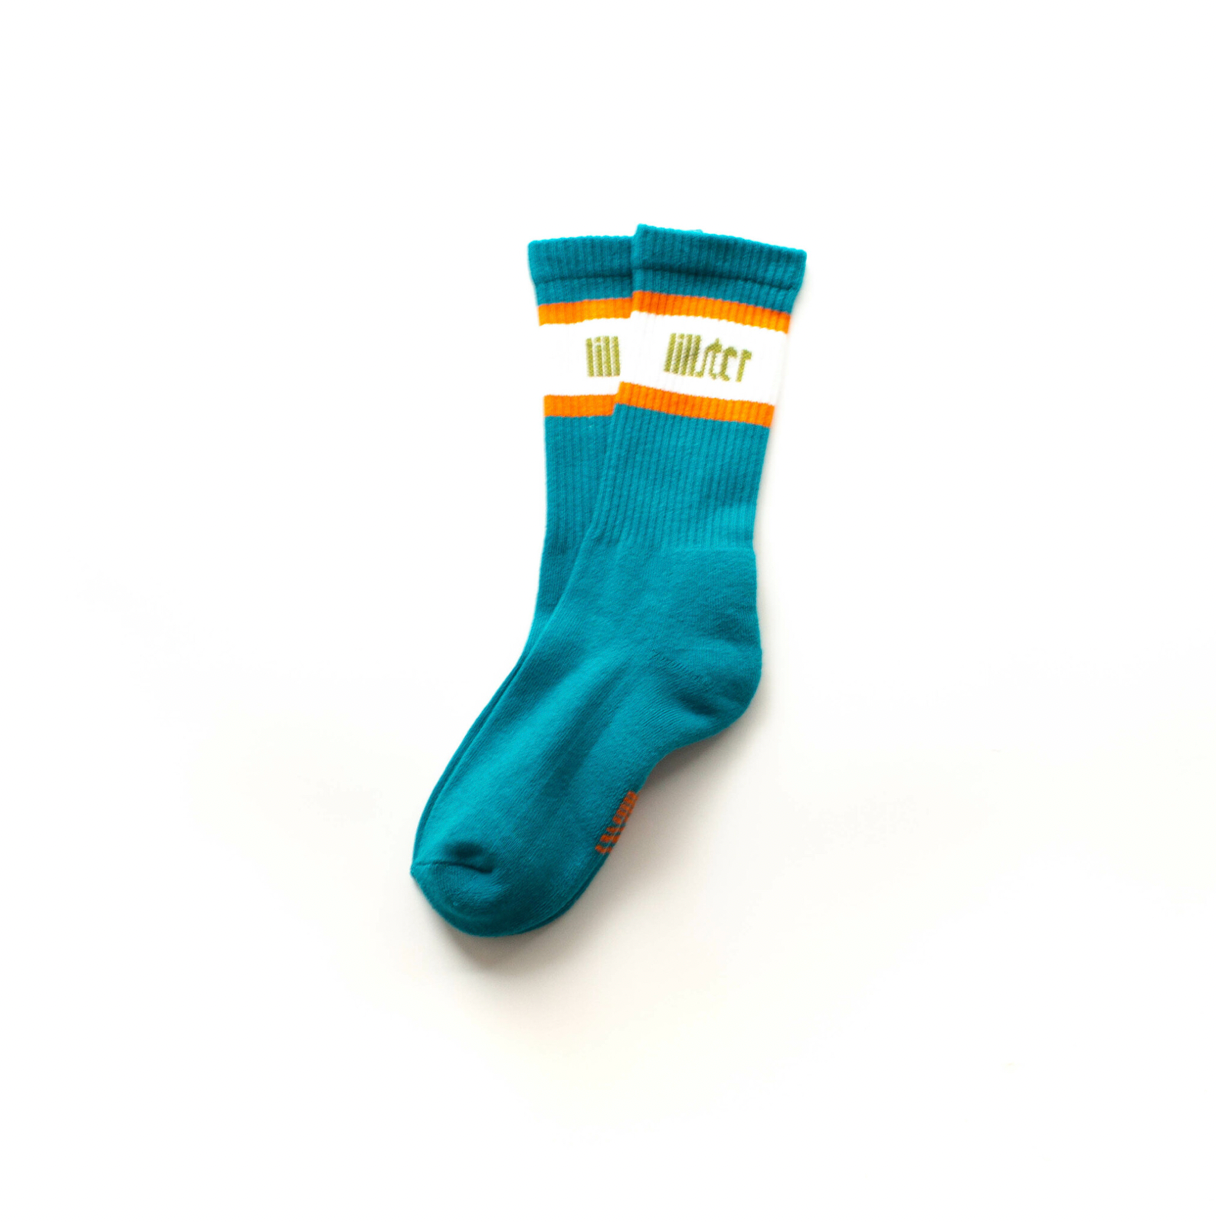 Teal Retro Socks - LAST PAIR 0-6 months